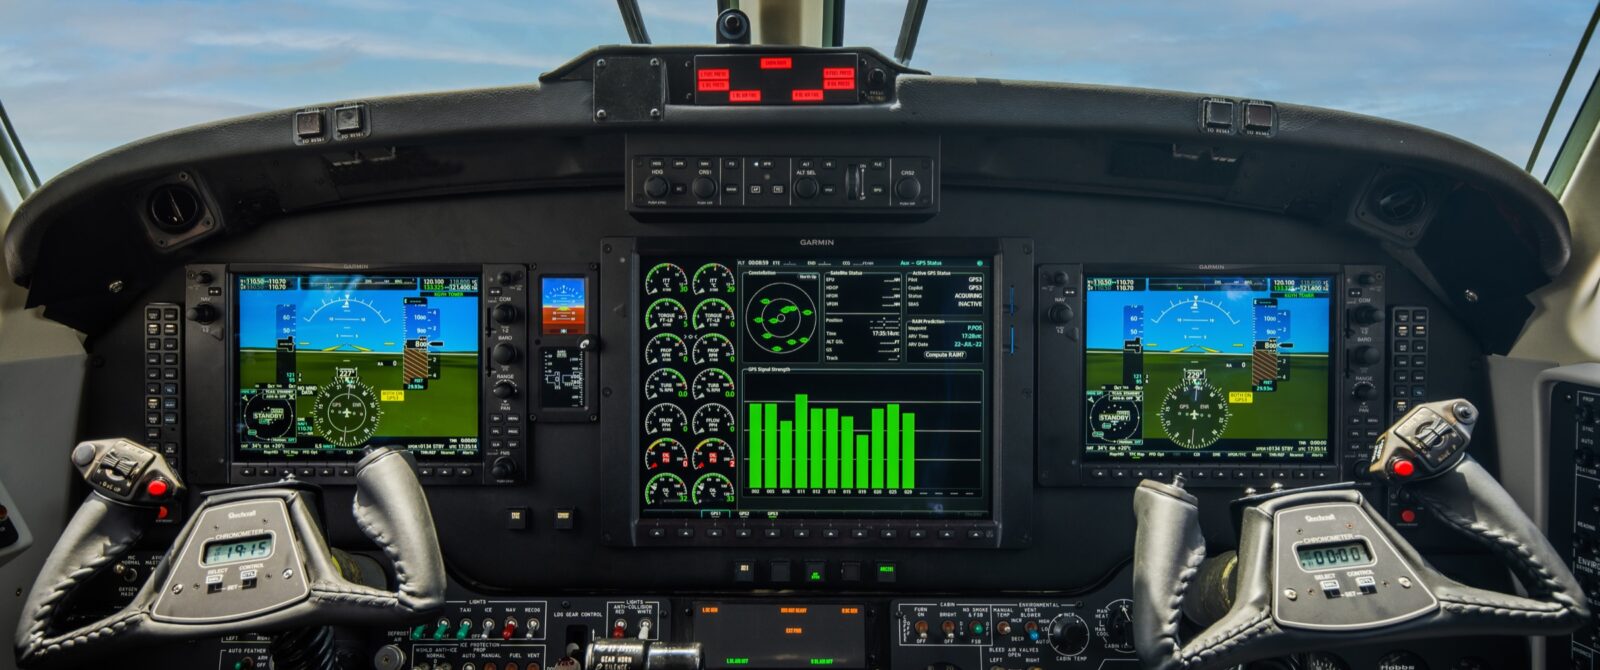 Avionics in an airplane cockpit